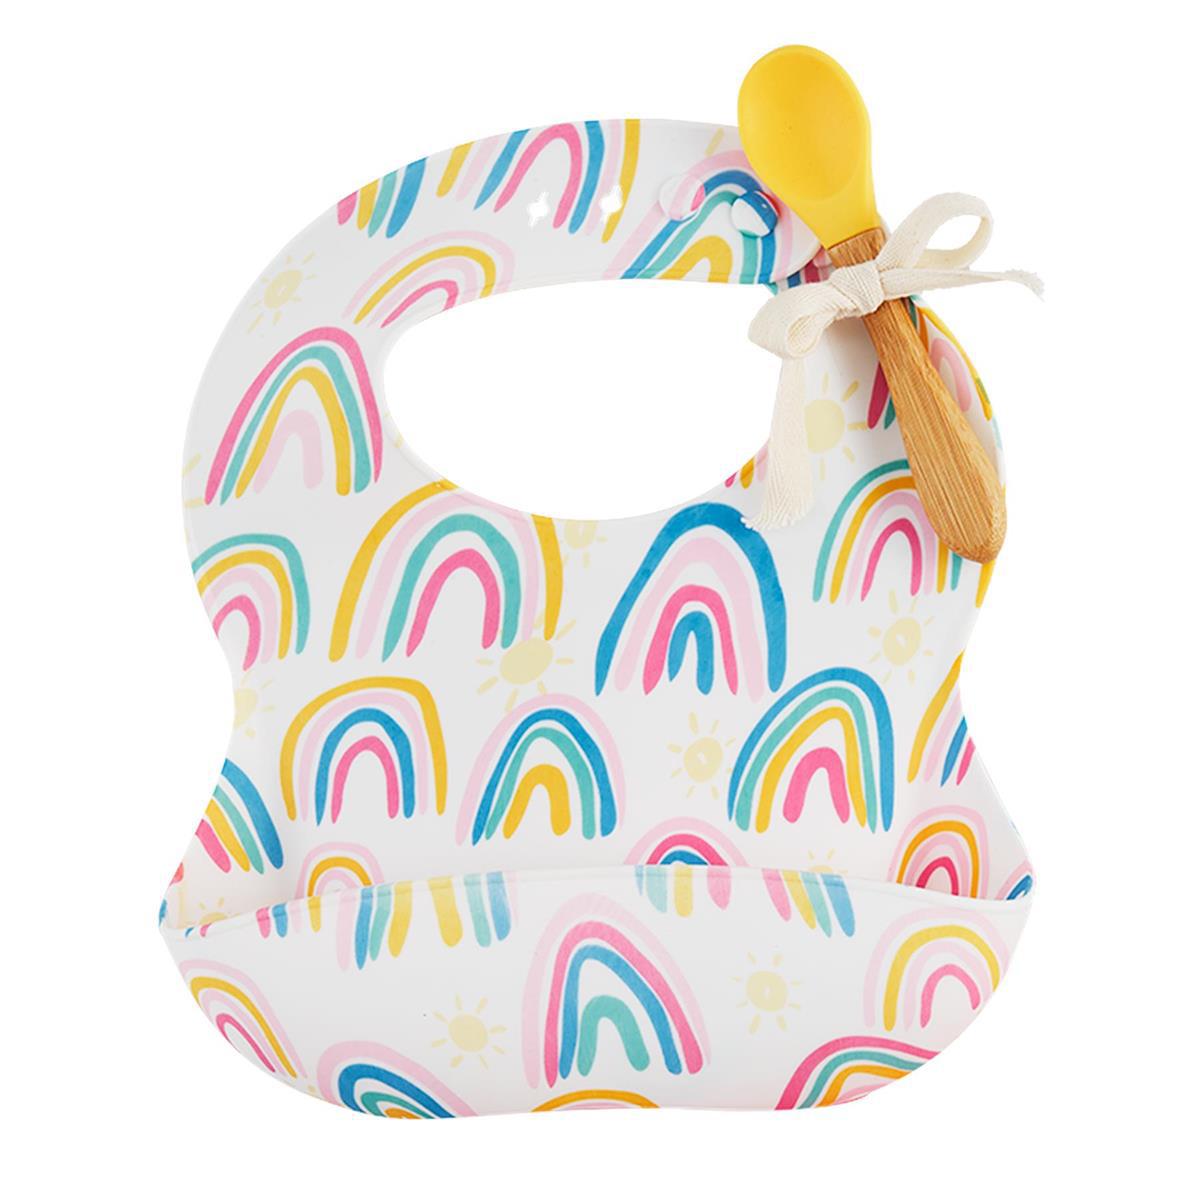 mud pie white silicone bib with rainbow print and yellow spoon baby gift set